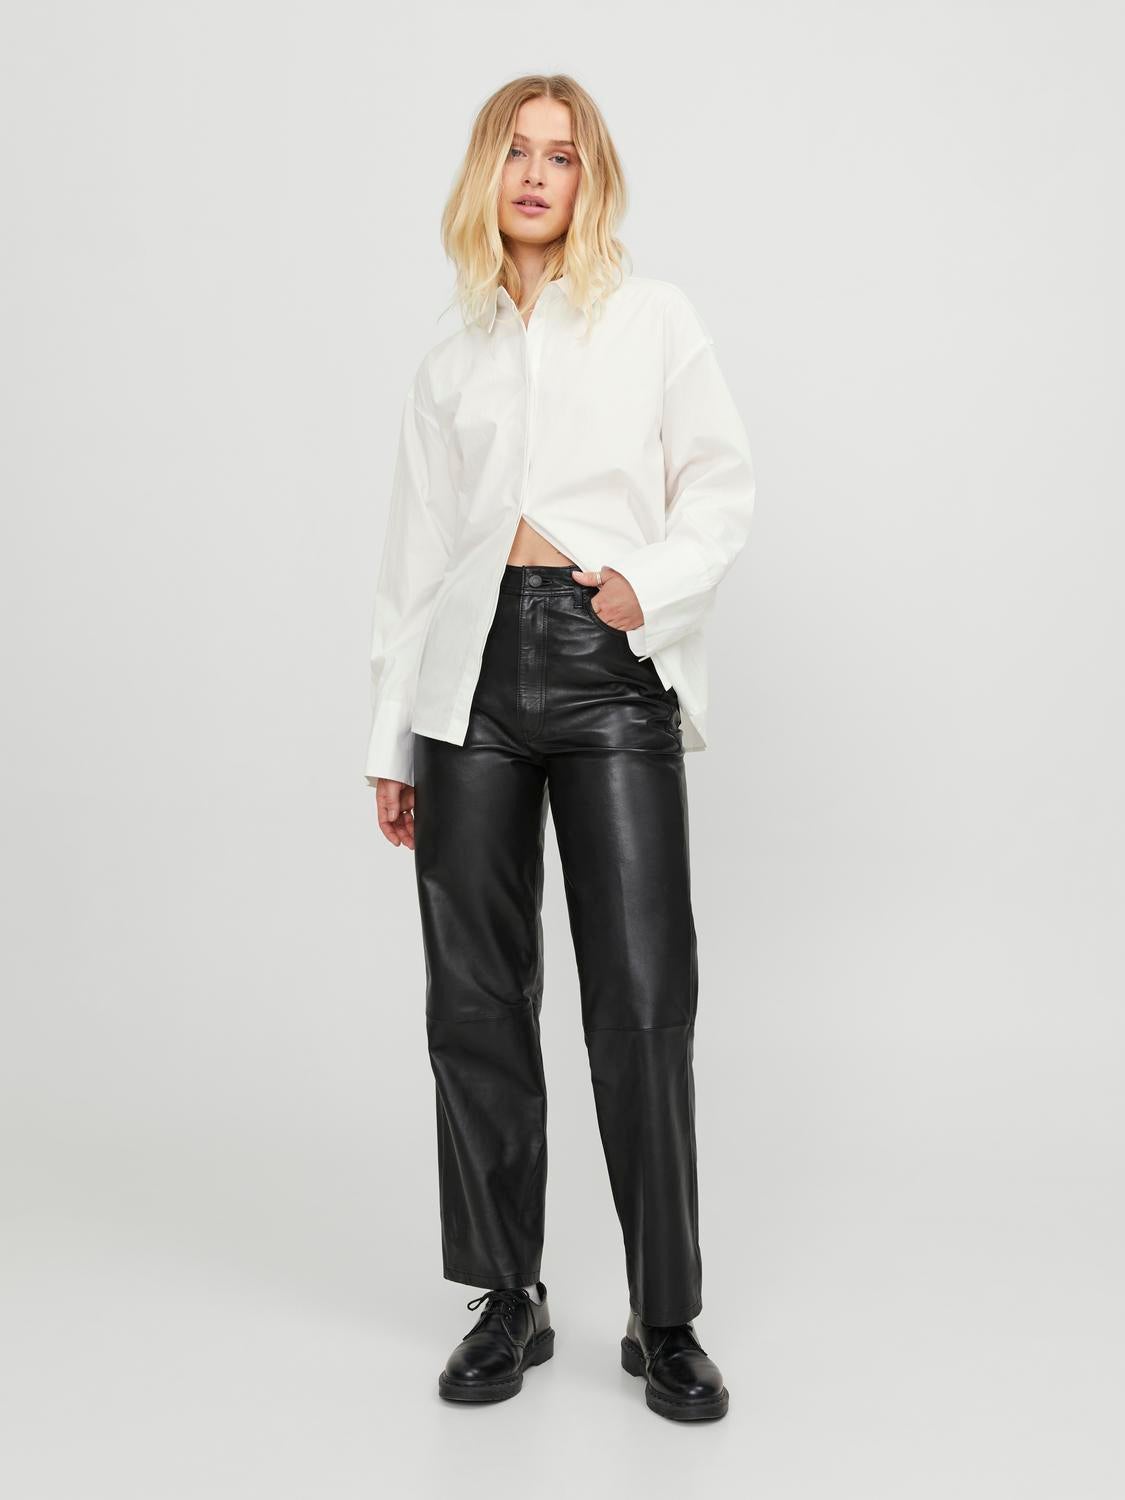 Zara leather trousers